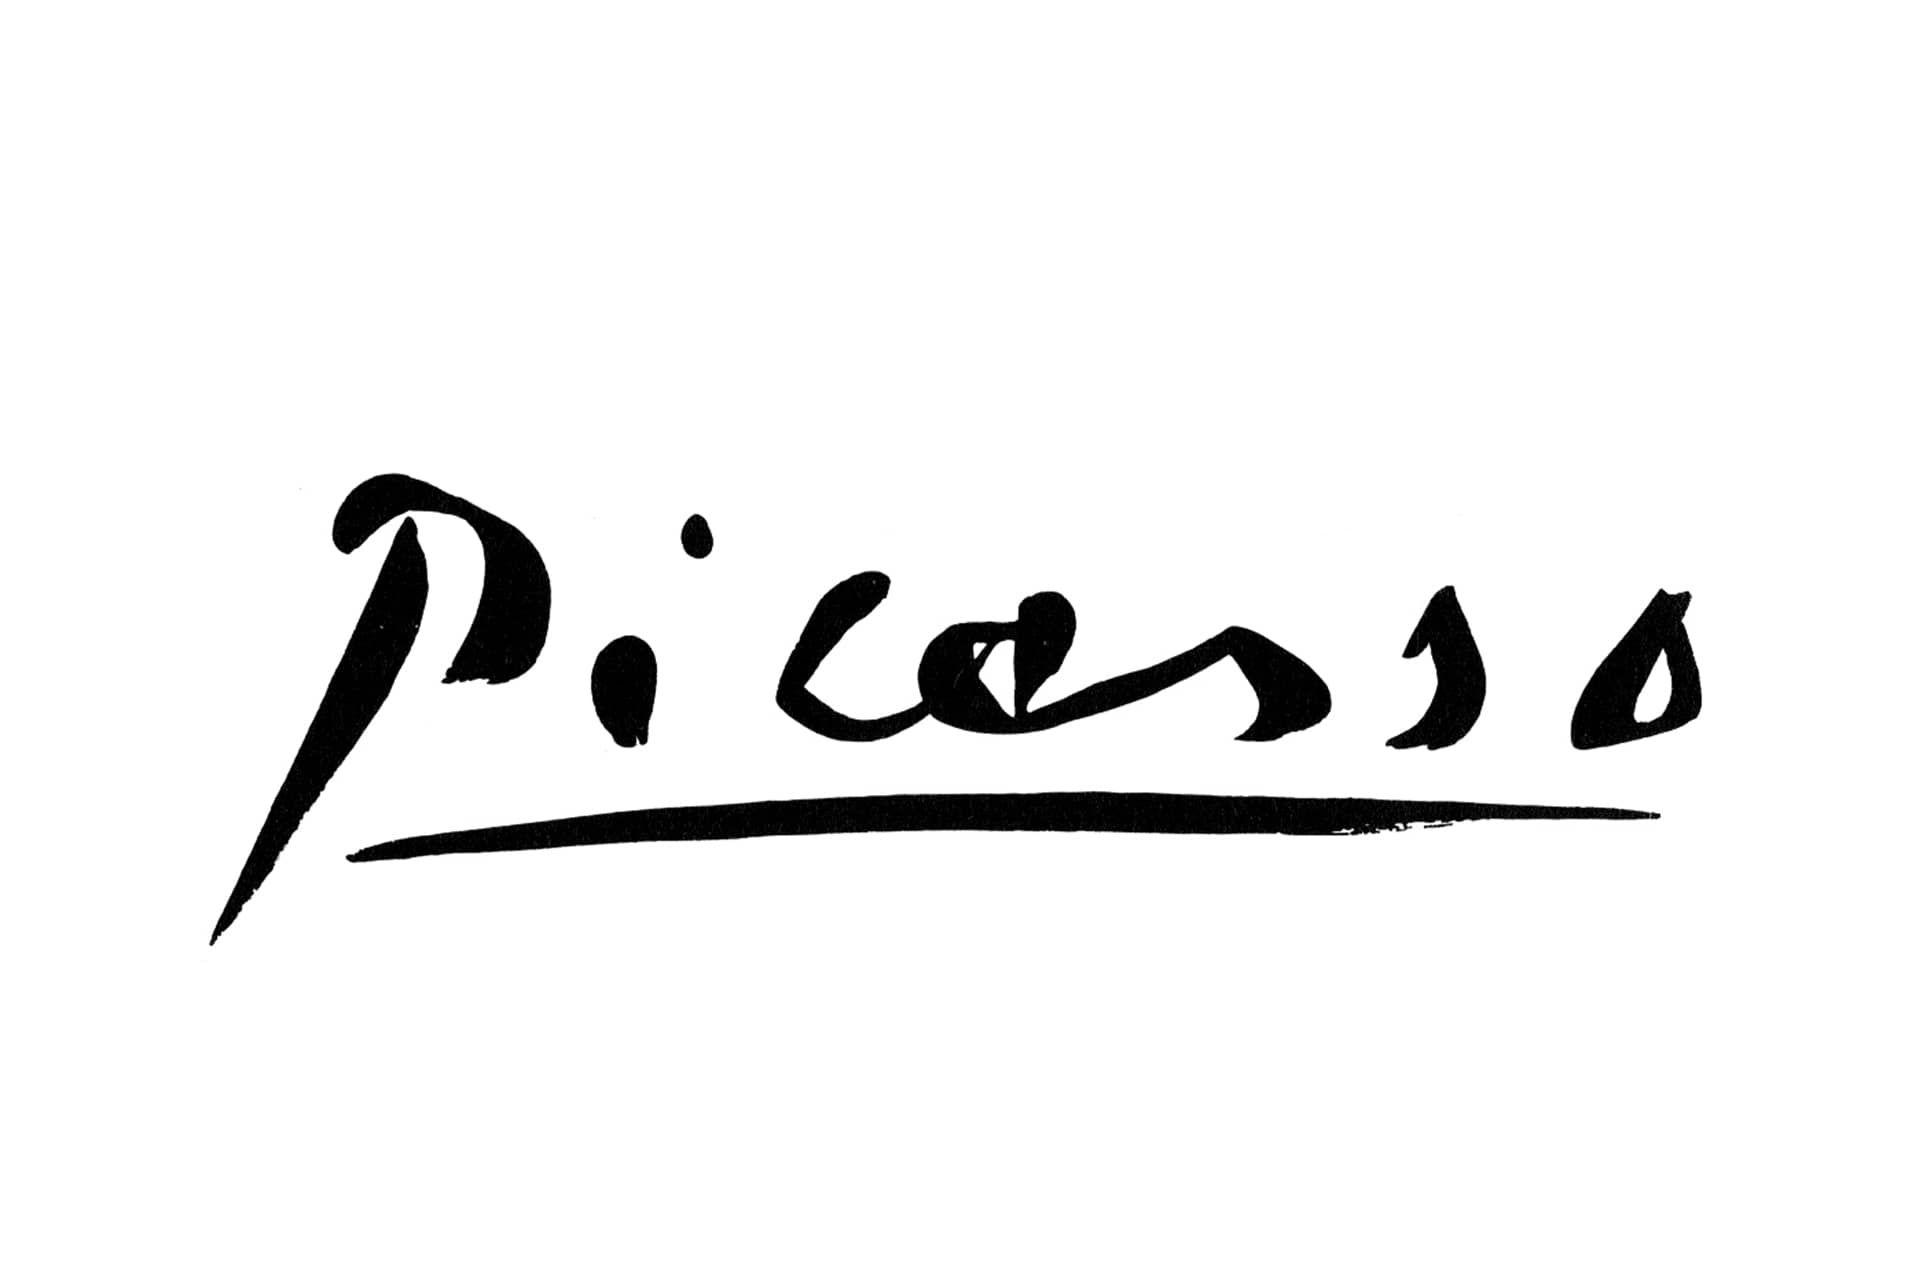 Picasso in Madrid i.s.m. Vrije Academie